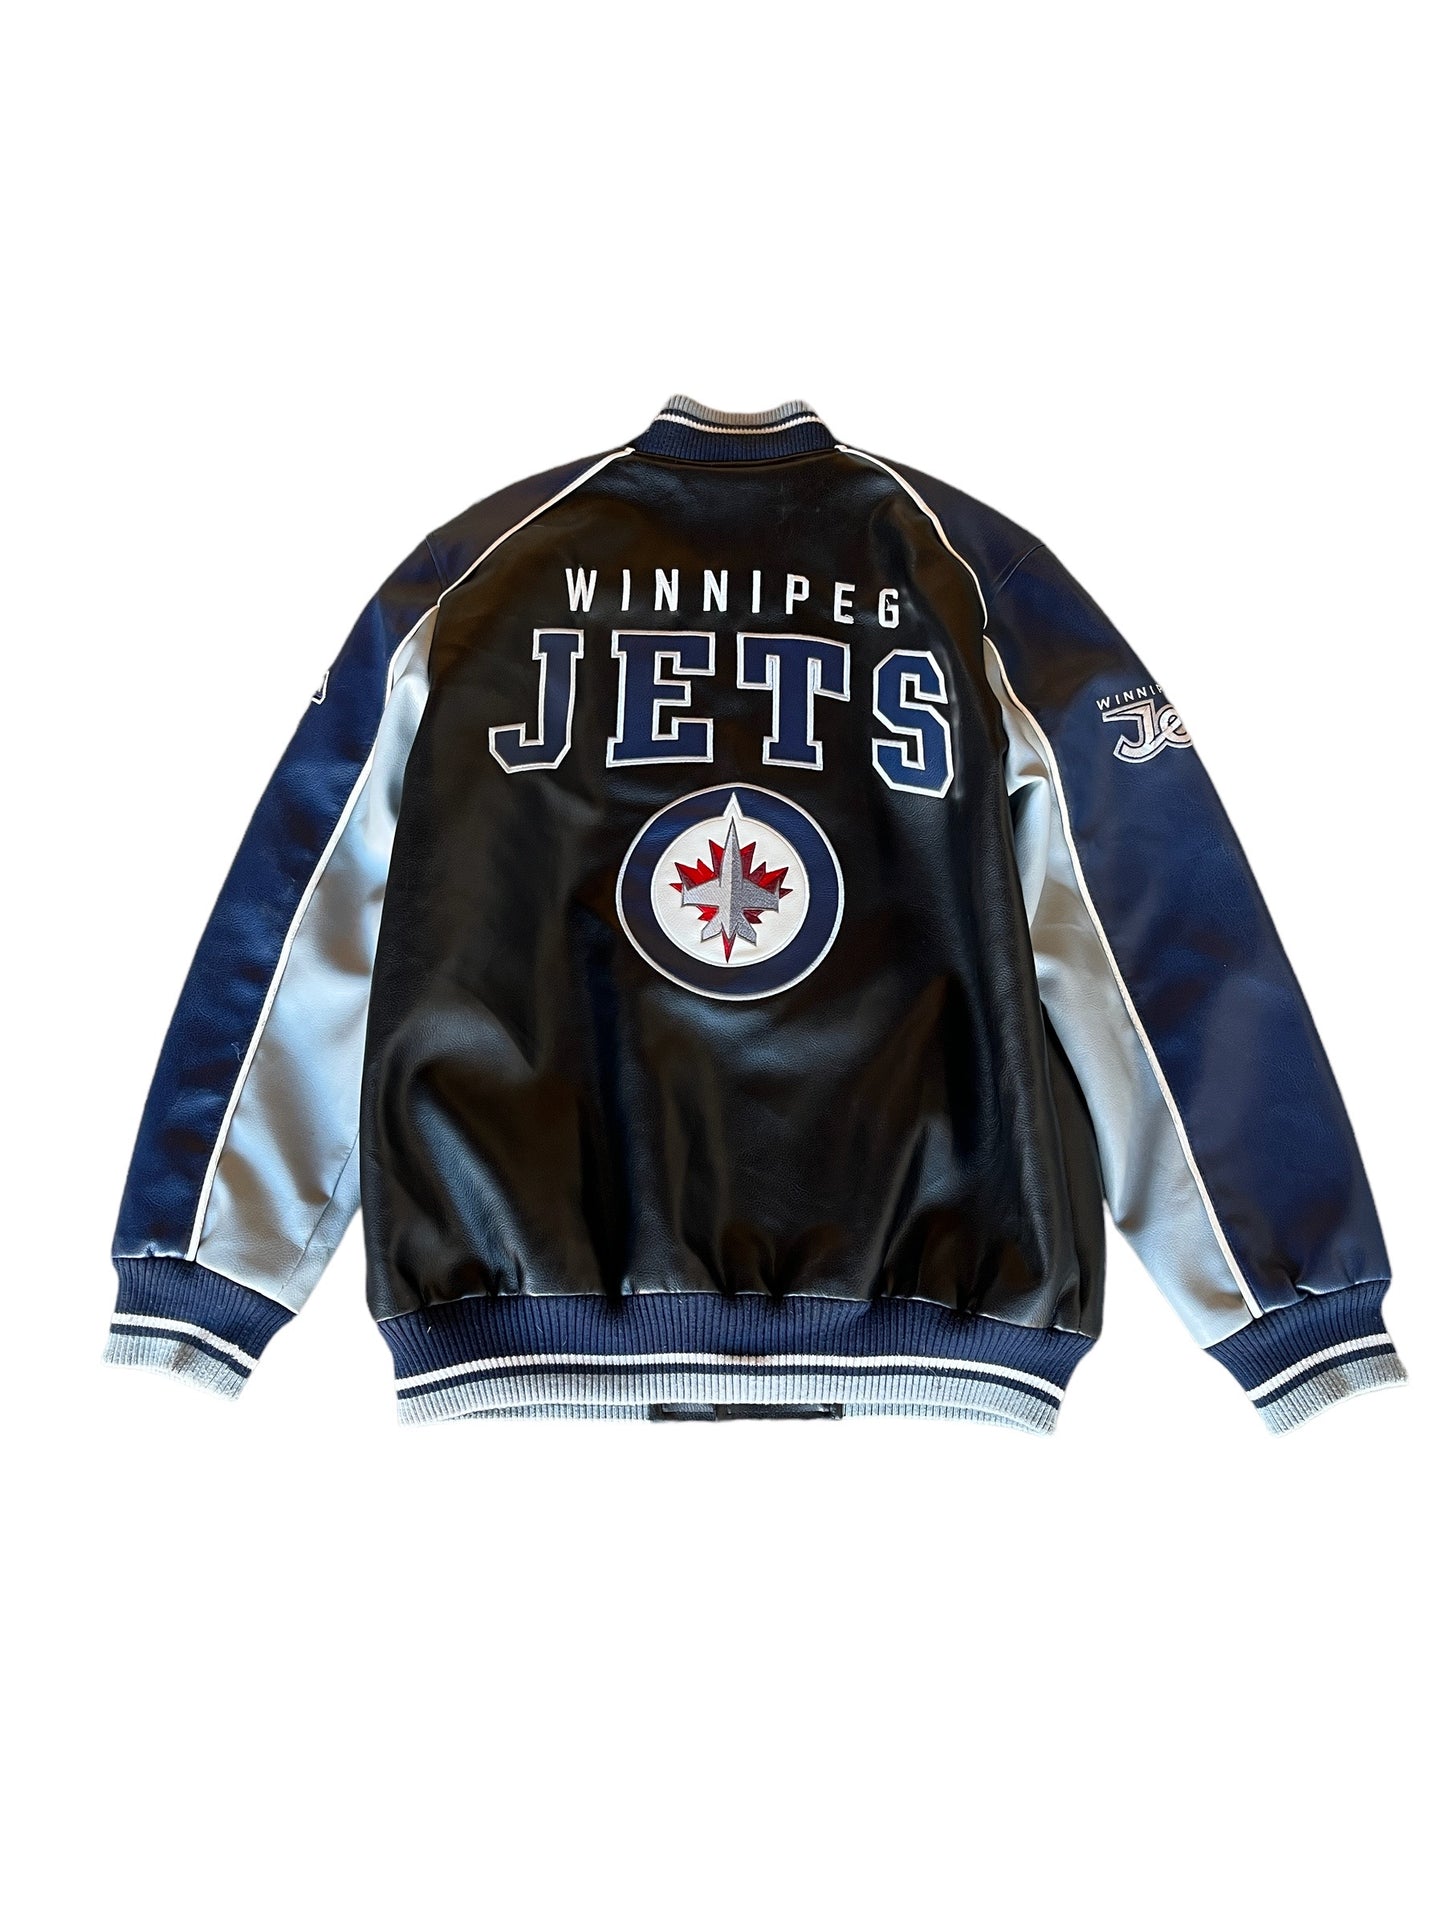 Rare NHL Winnipeg Jets Leather Bomber Jacket